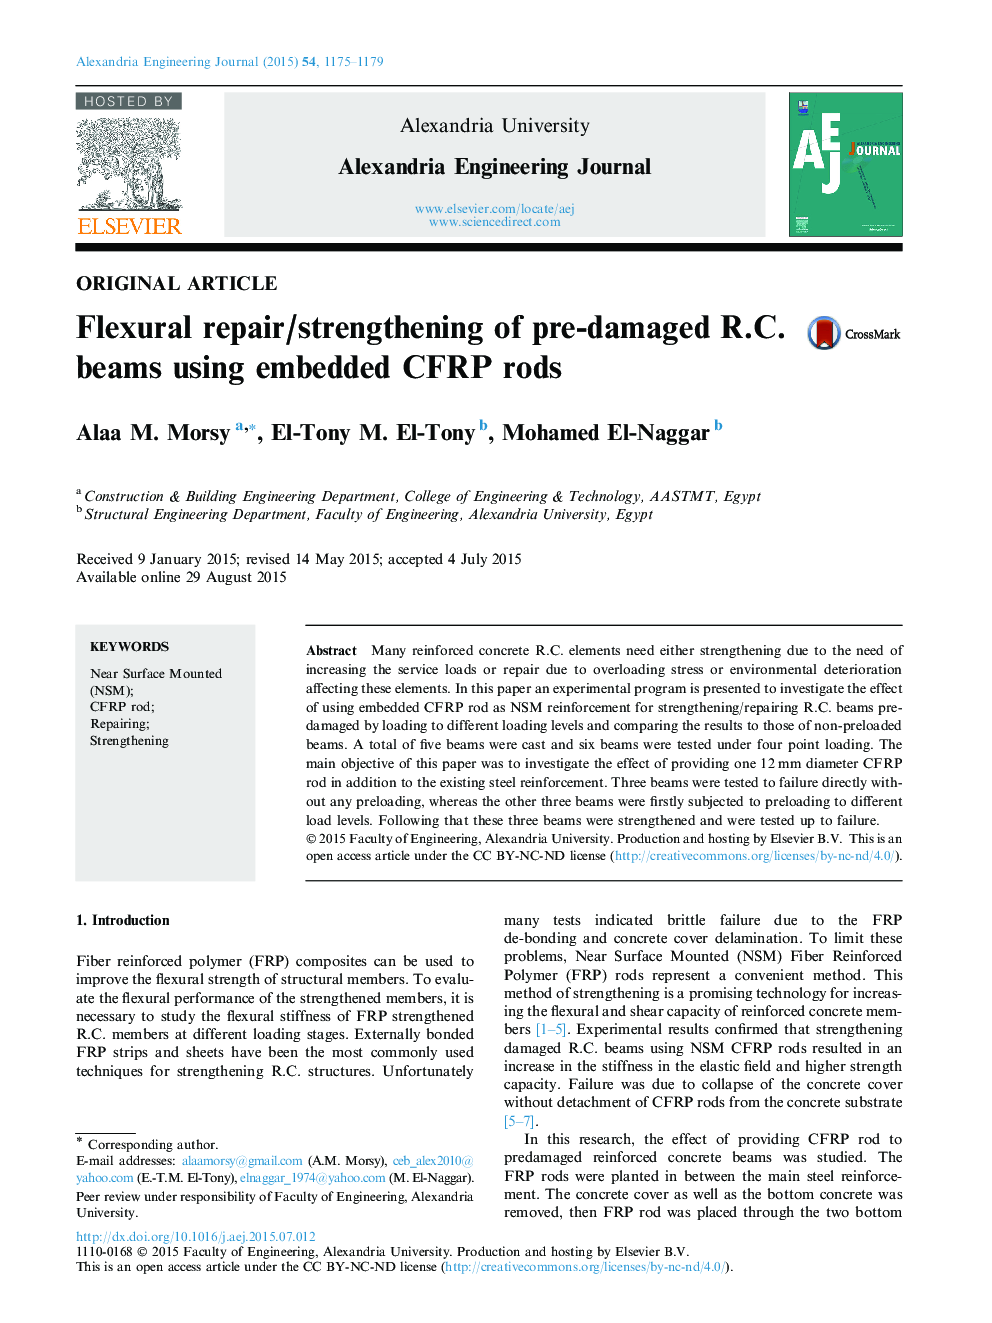 Flexural repair/strengthening of pre-damaged R.C. beams using embedded CFRP rods 